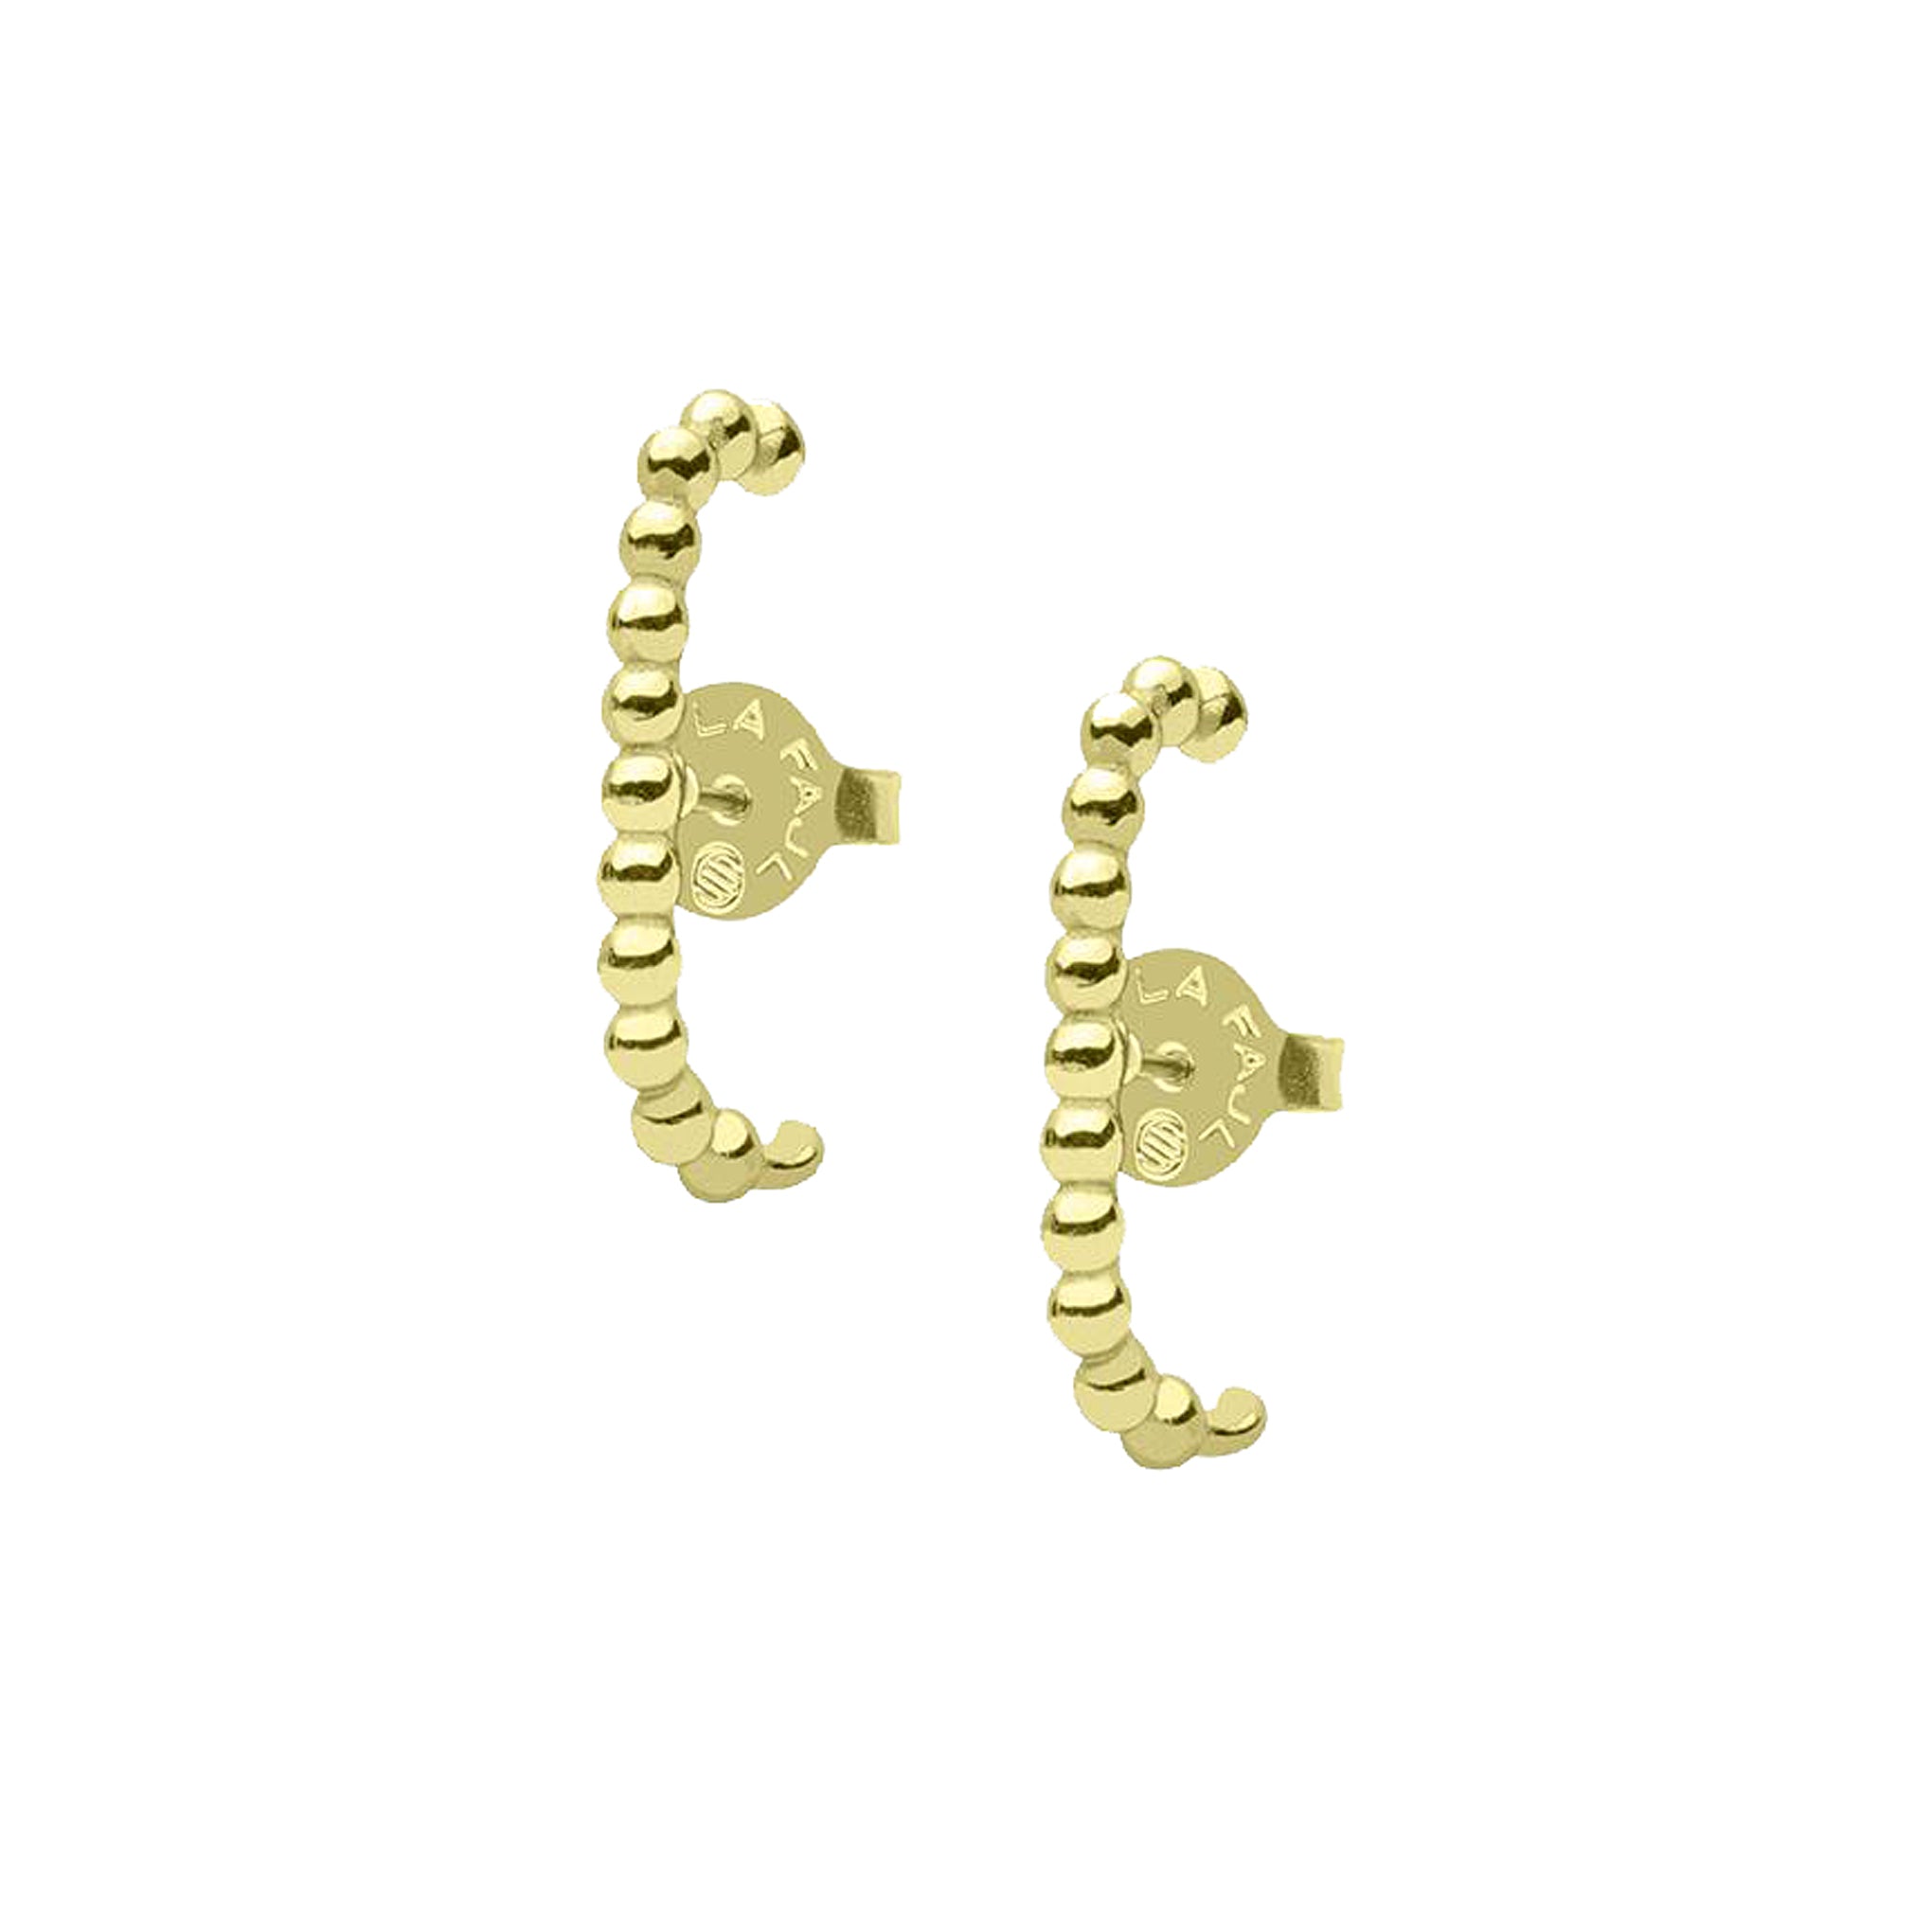 Sheila Fajl Benny Hug Ear Cuff Stud Earrings in Polished Gold Plated